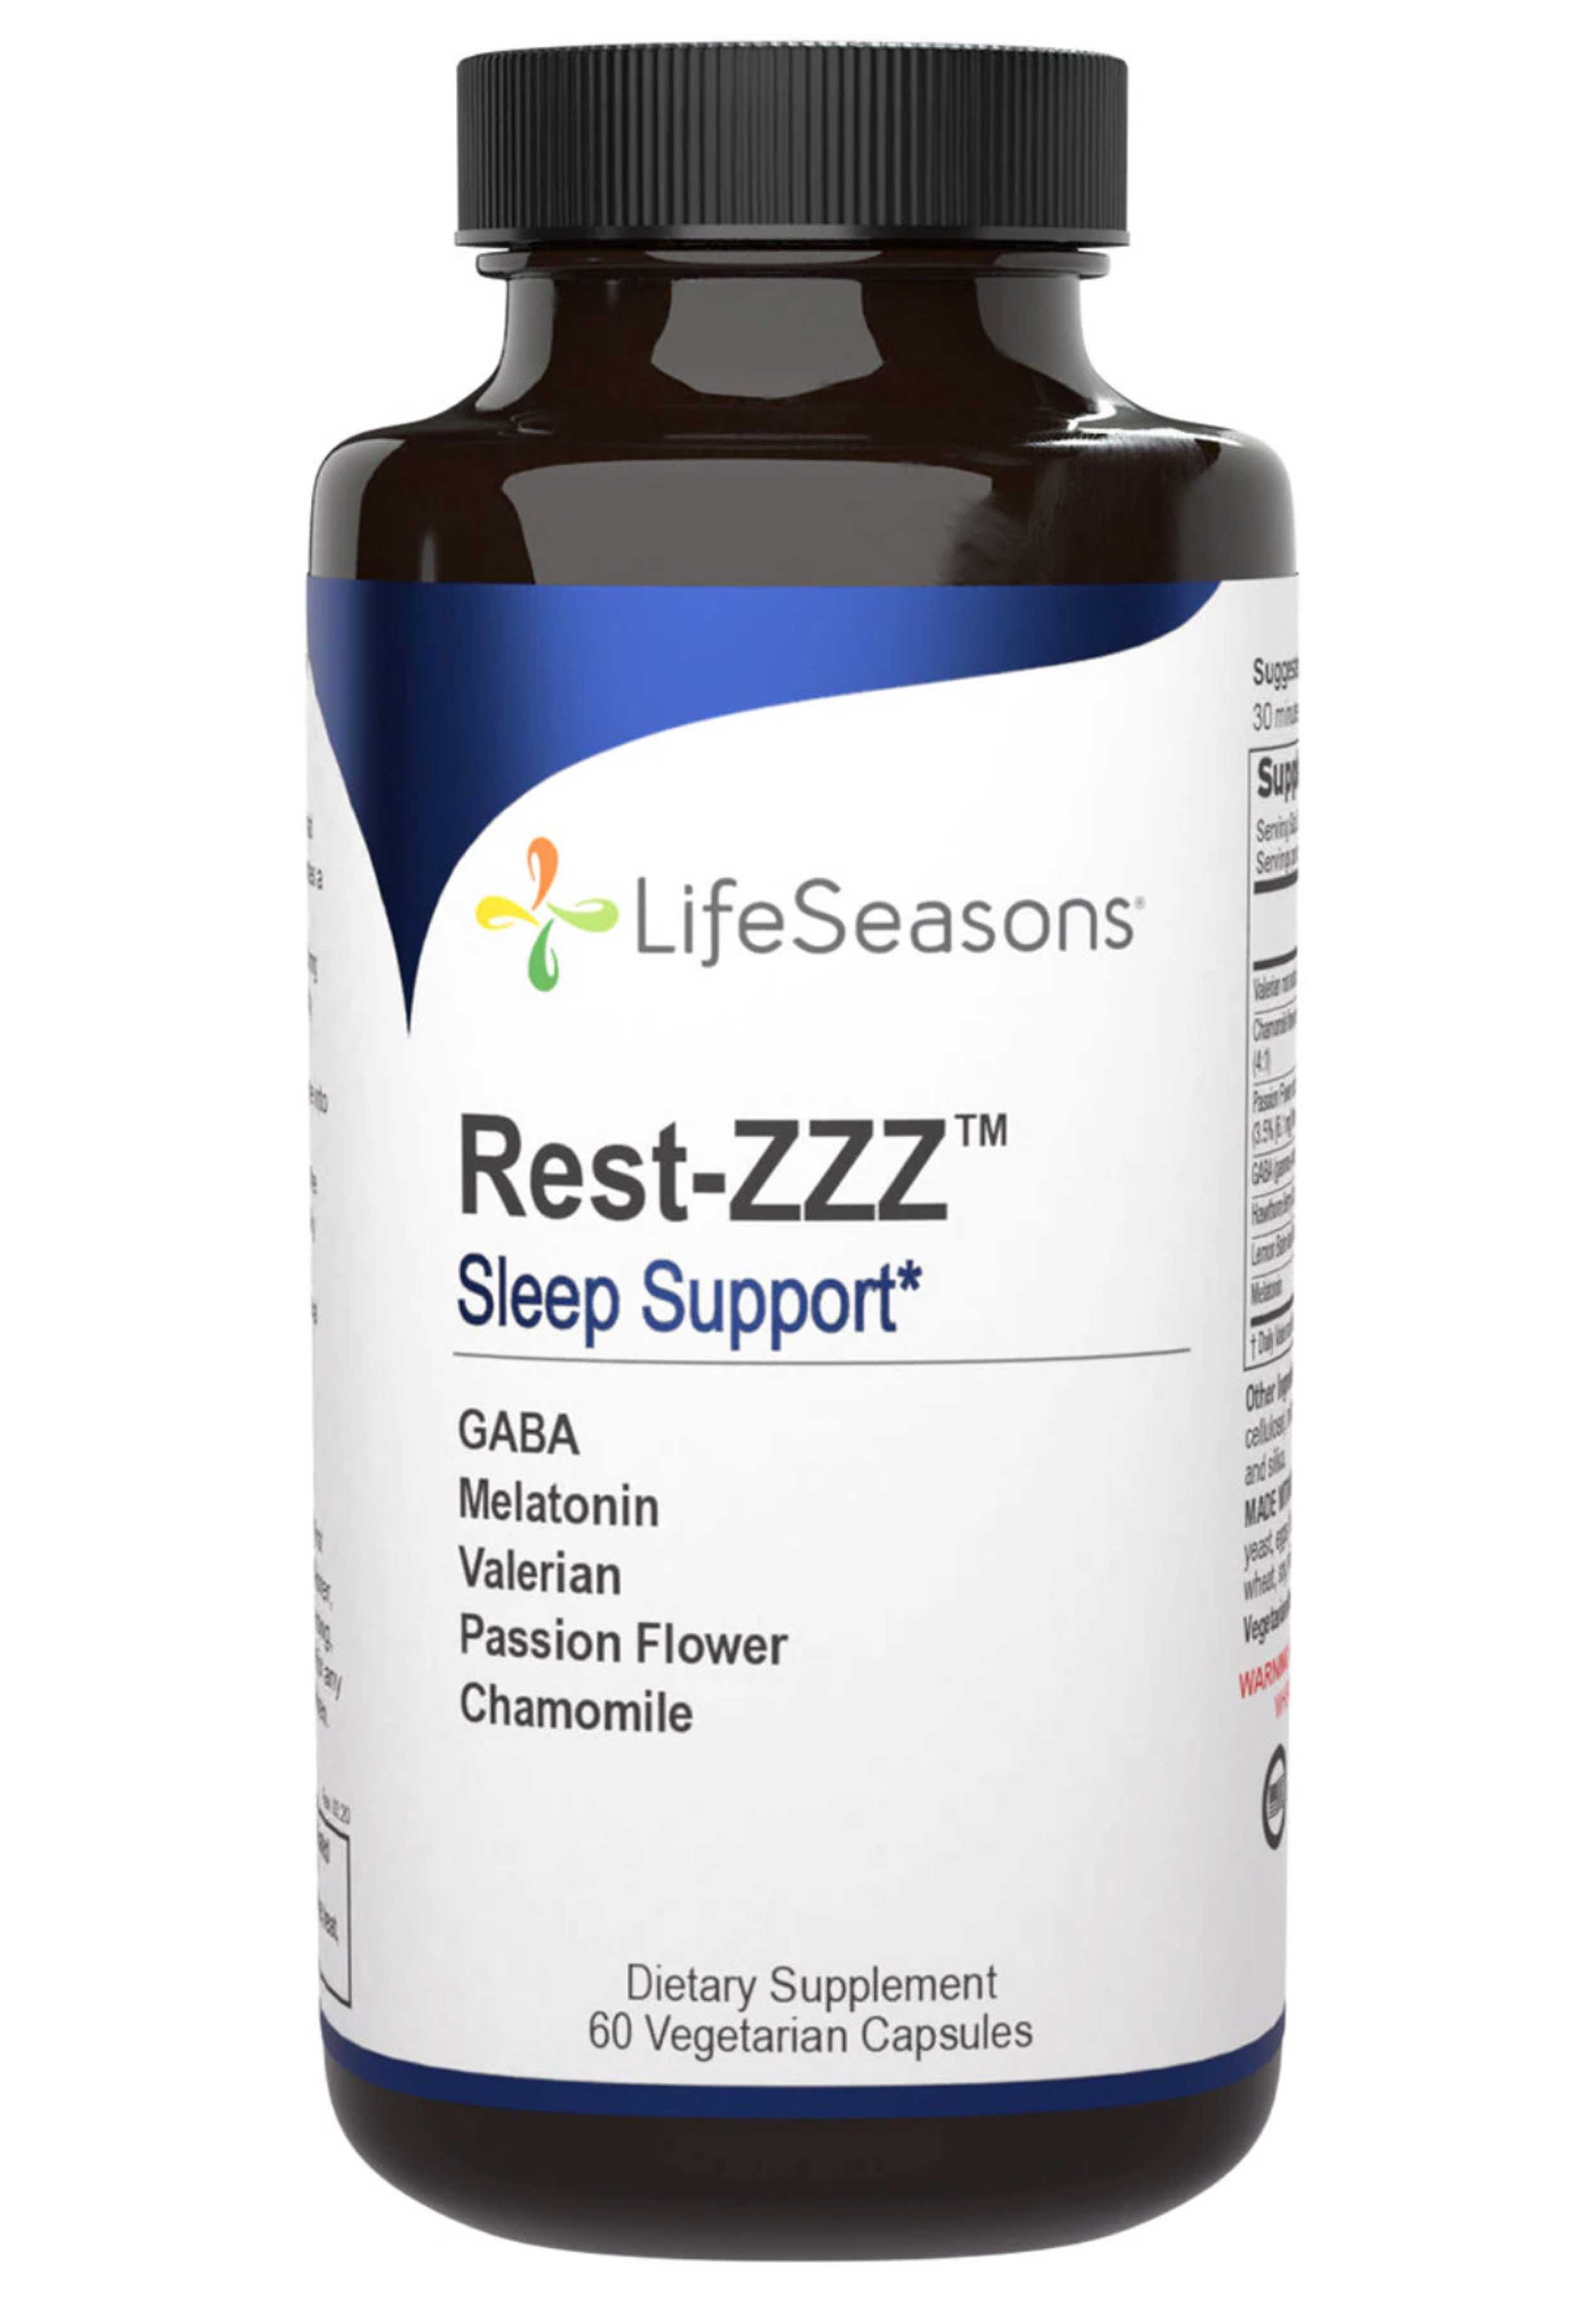 LifeSeasons Rest-ZZZ